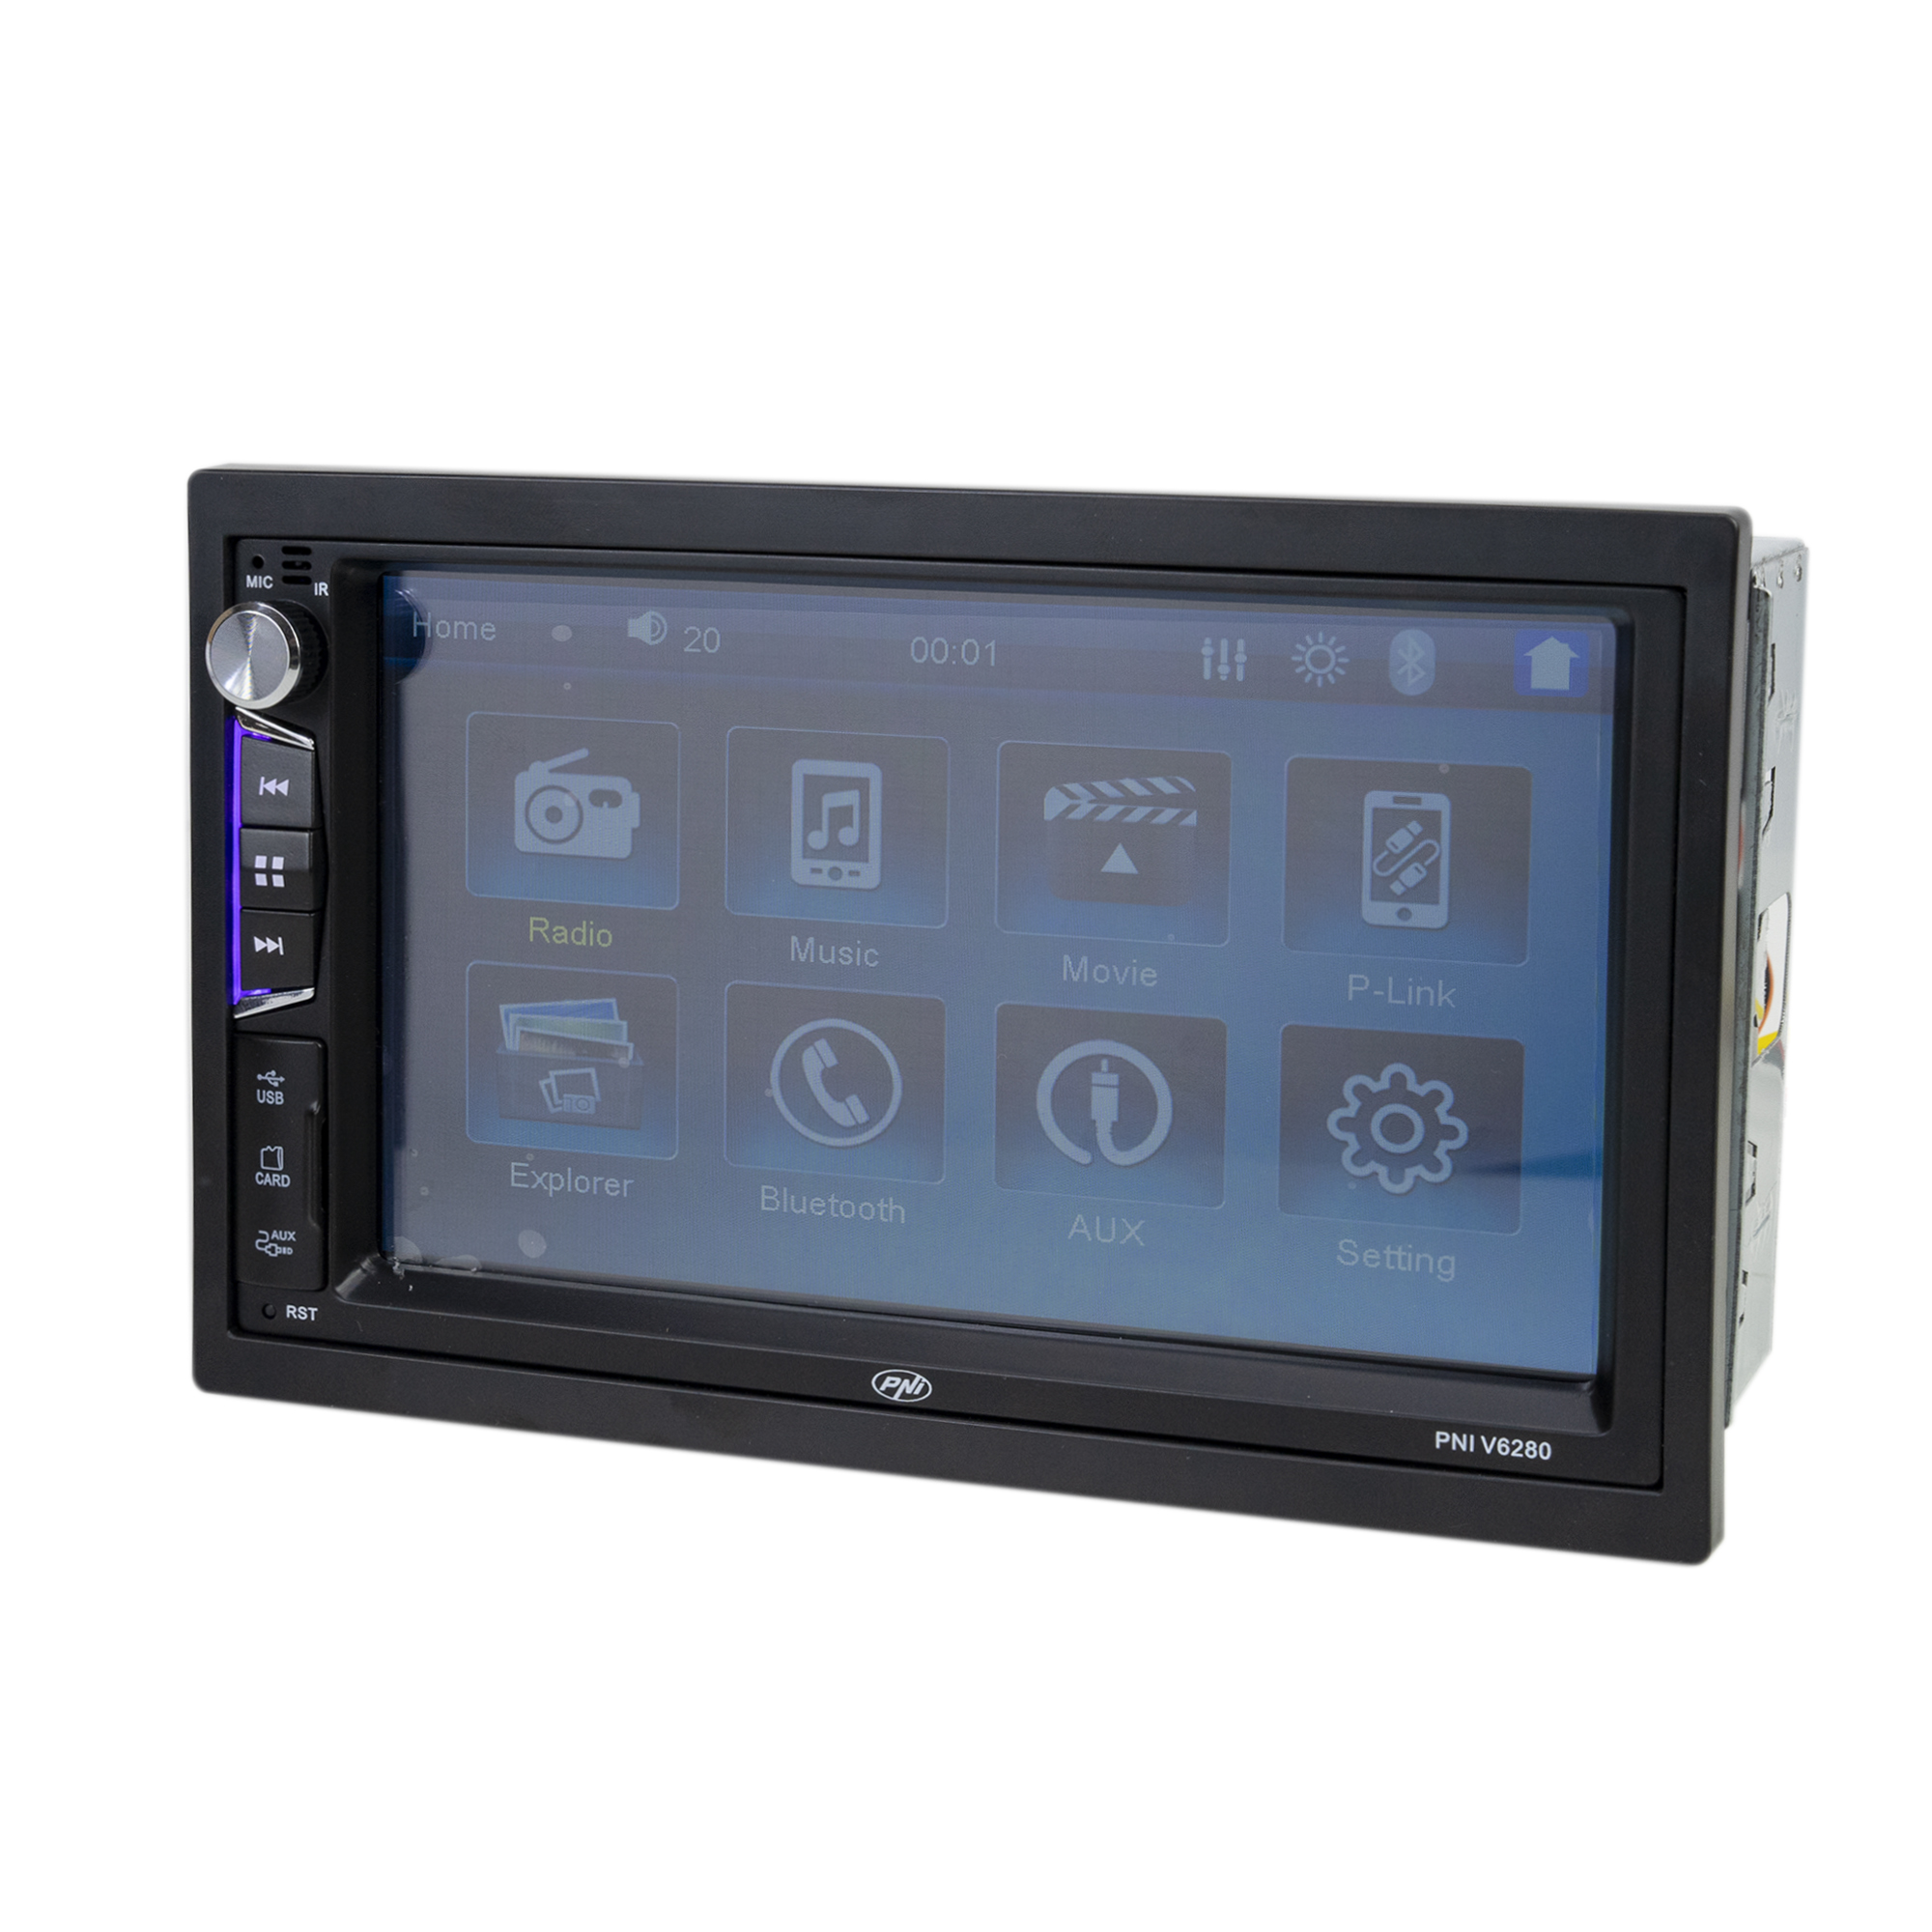 PNI V6280 Auto-Multimedia-Player mit Touchscreen - Bild 3